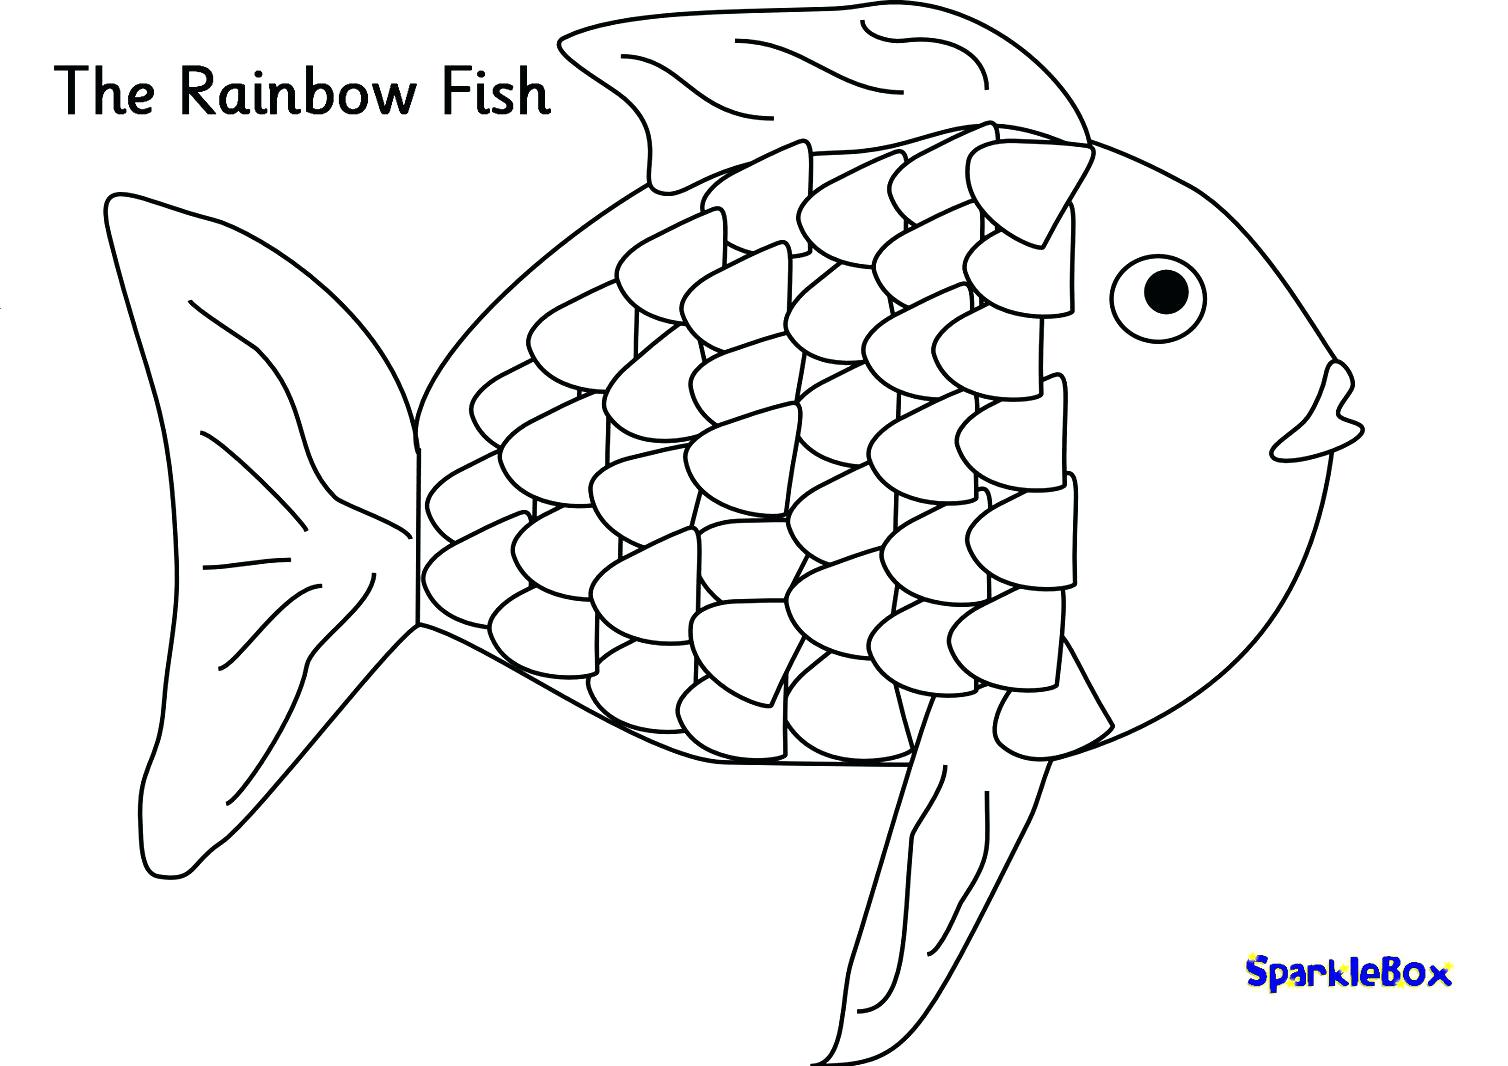 rainbow-fish-coloring-page-at-getdrawings-free-download